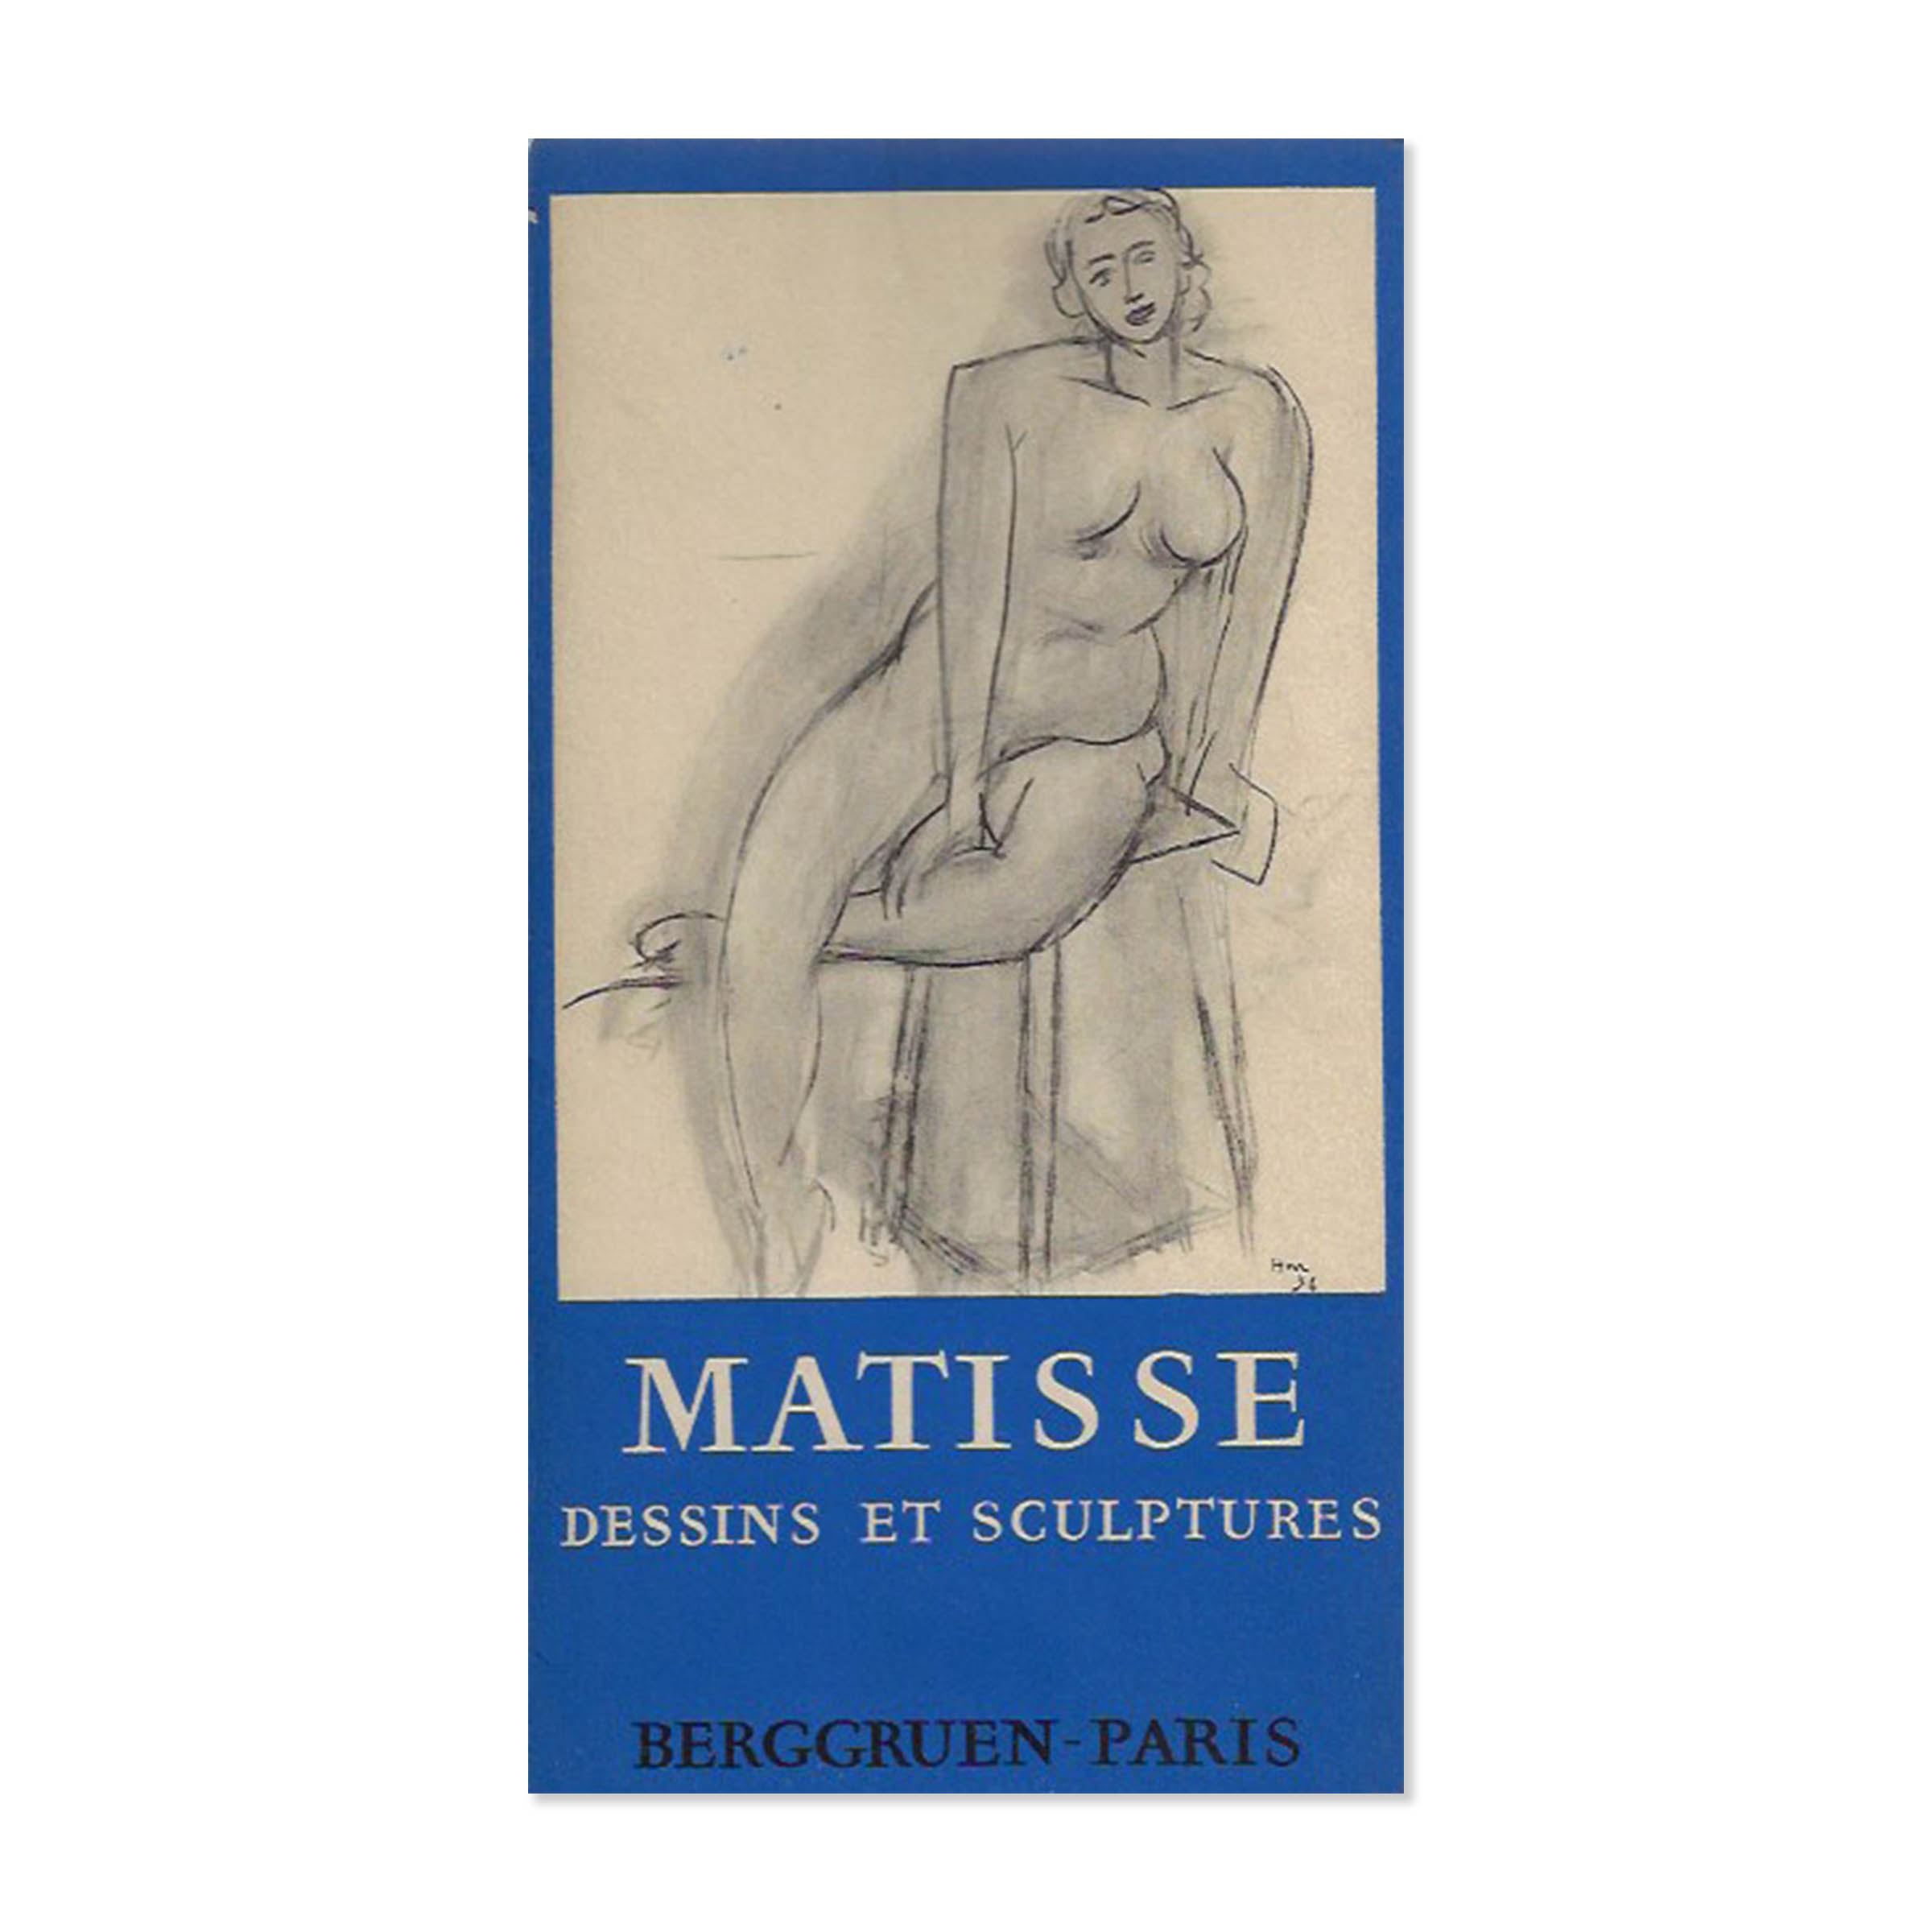 Matisse Dessins. Cover view